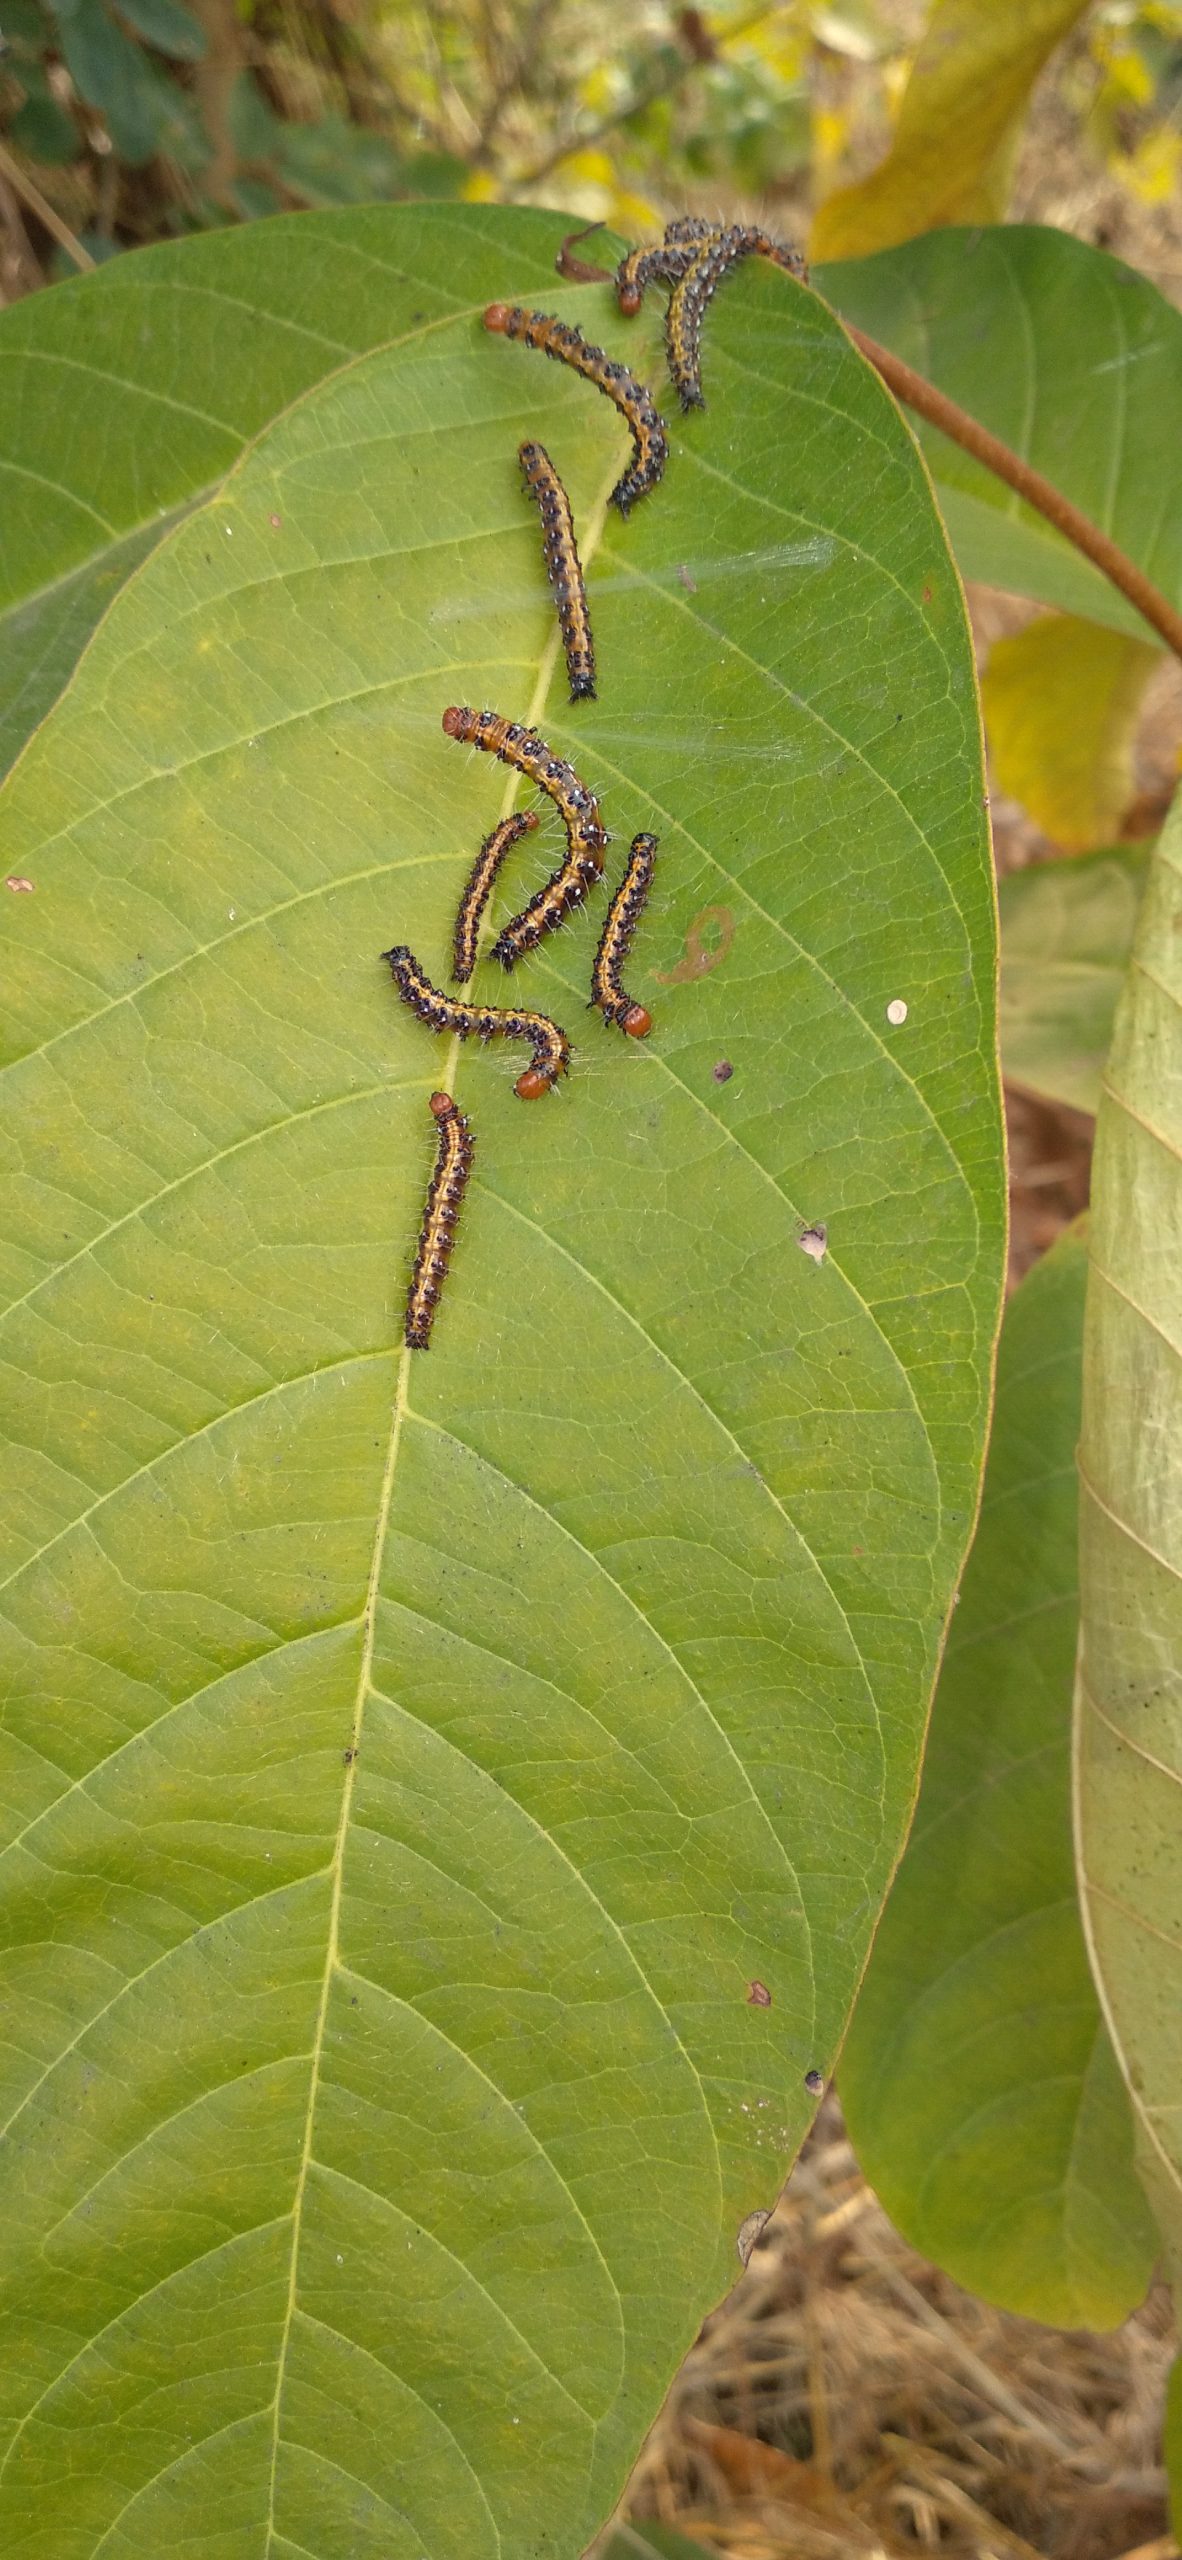 Caterpillars on a leaf